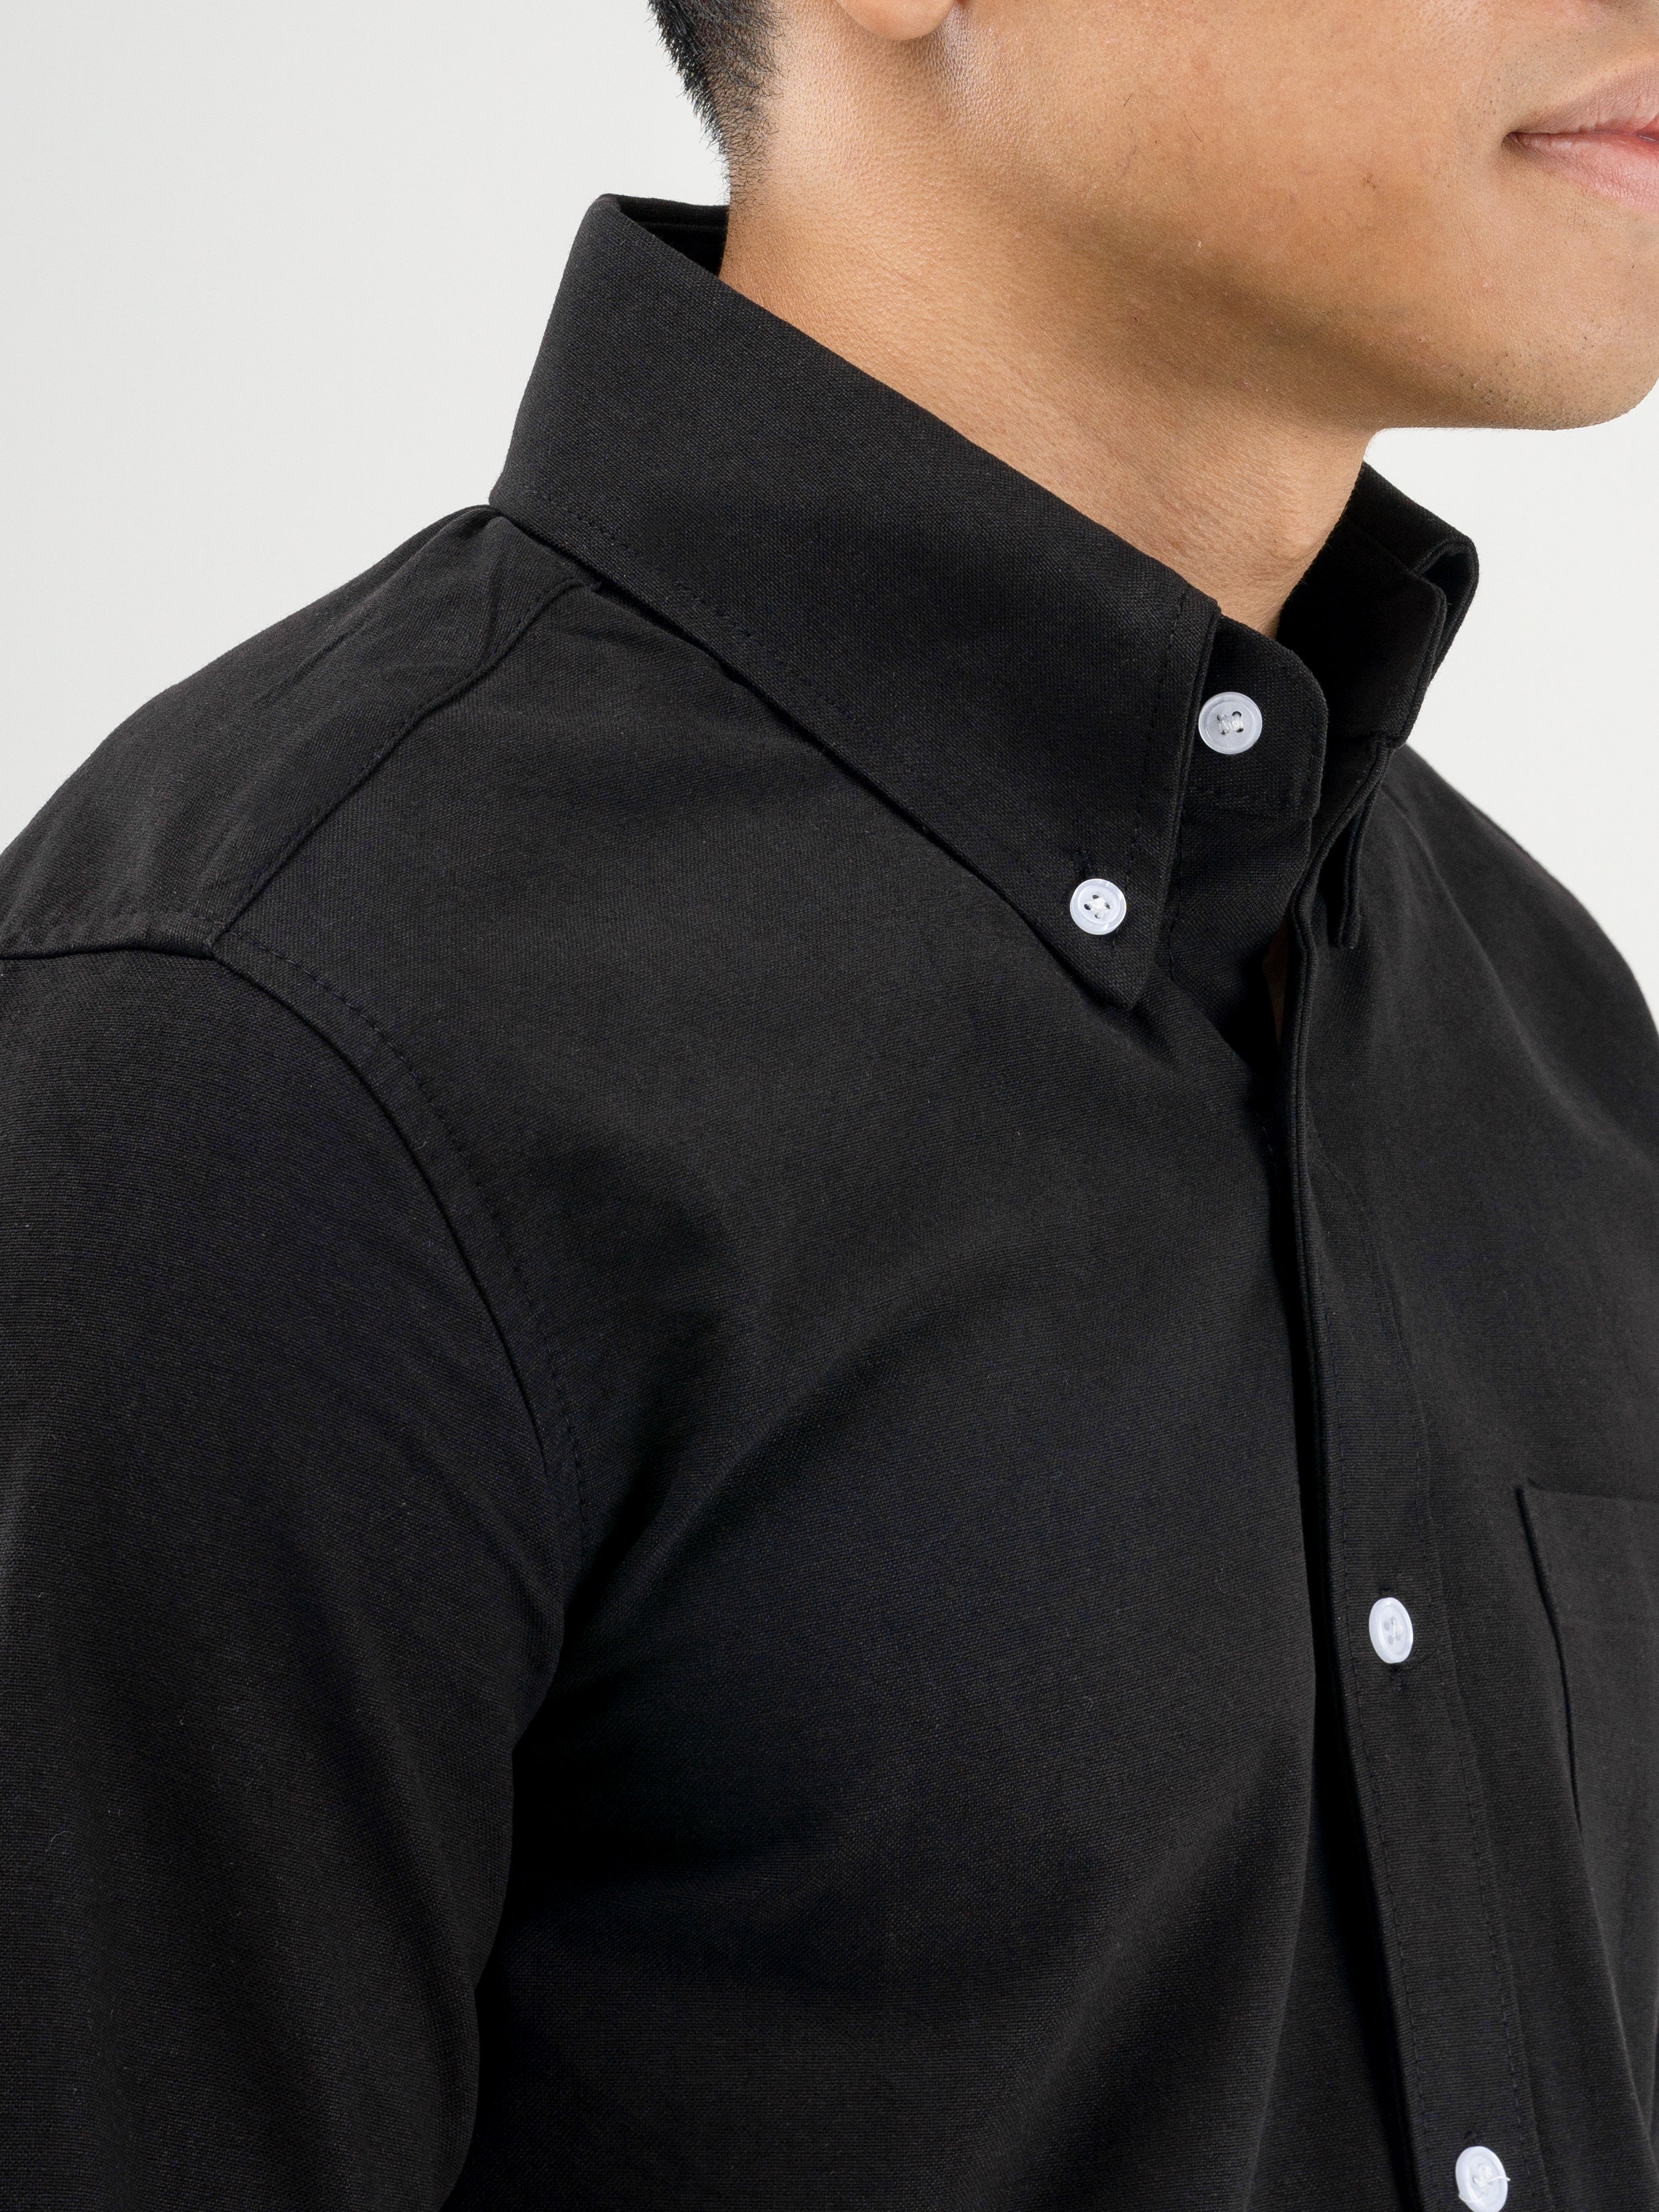 Formal Shirt - Black Oxford Button-Down Collar